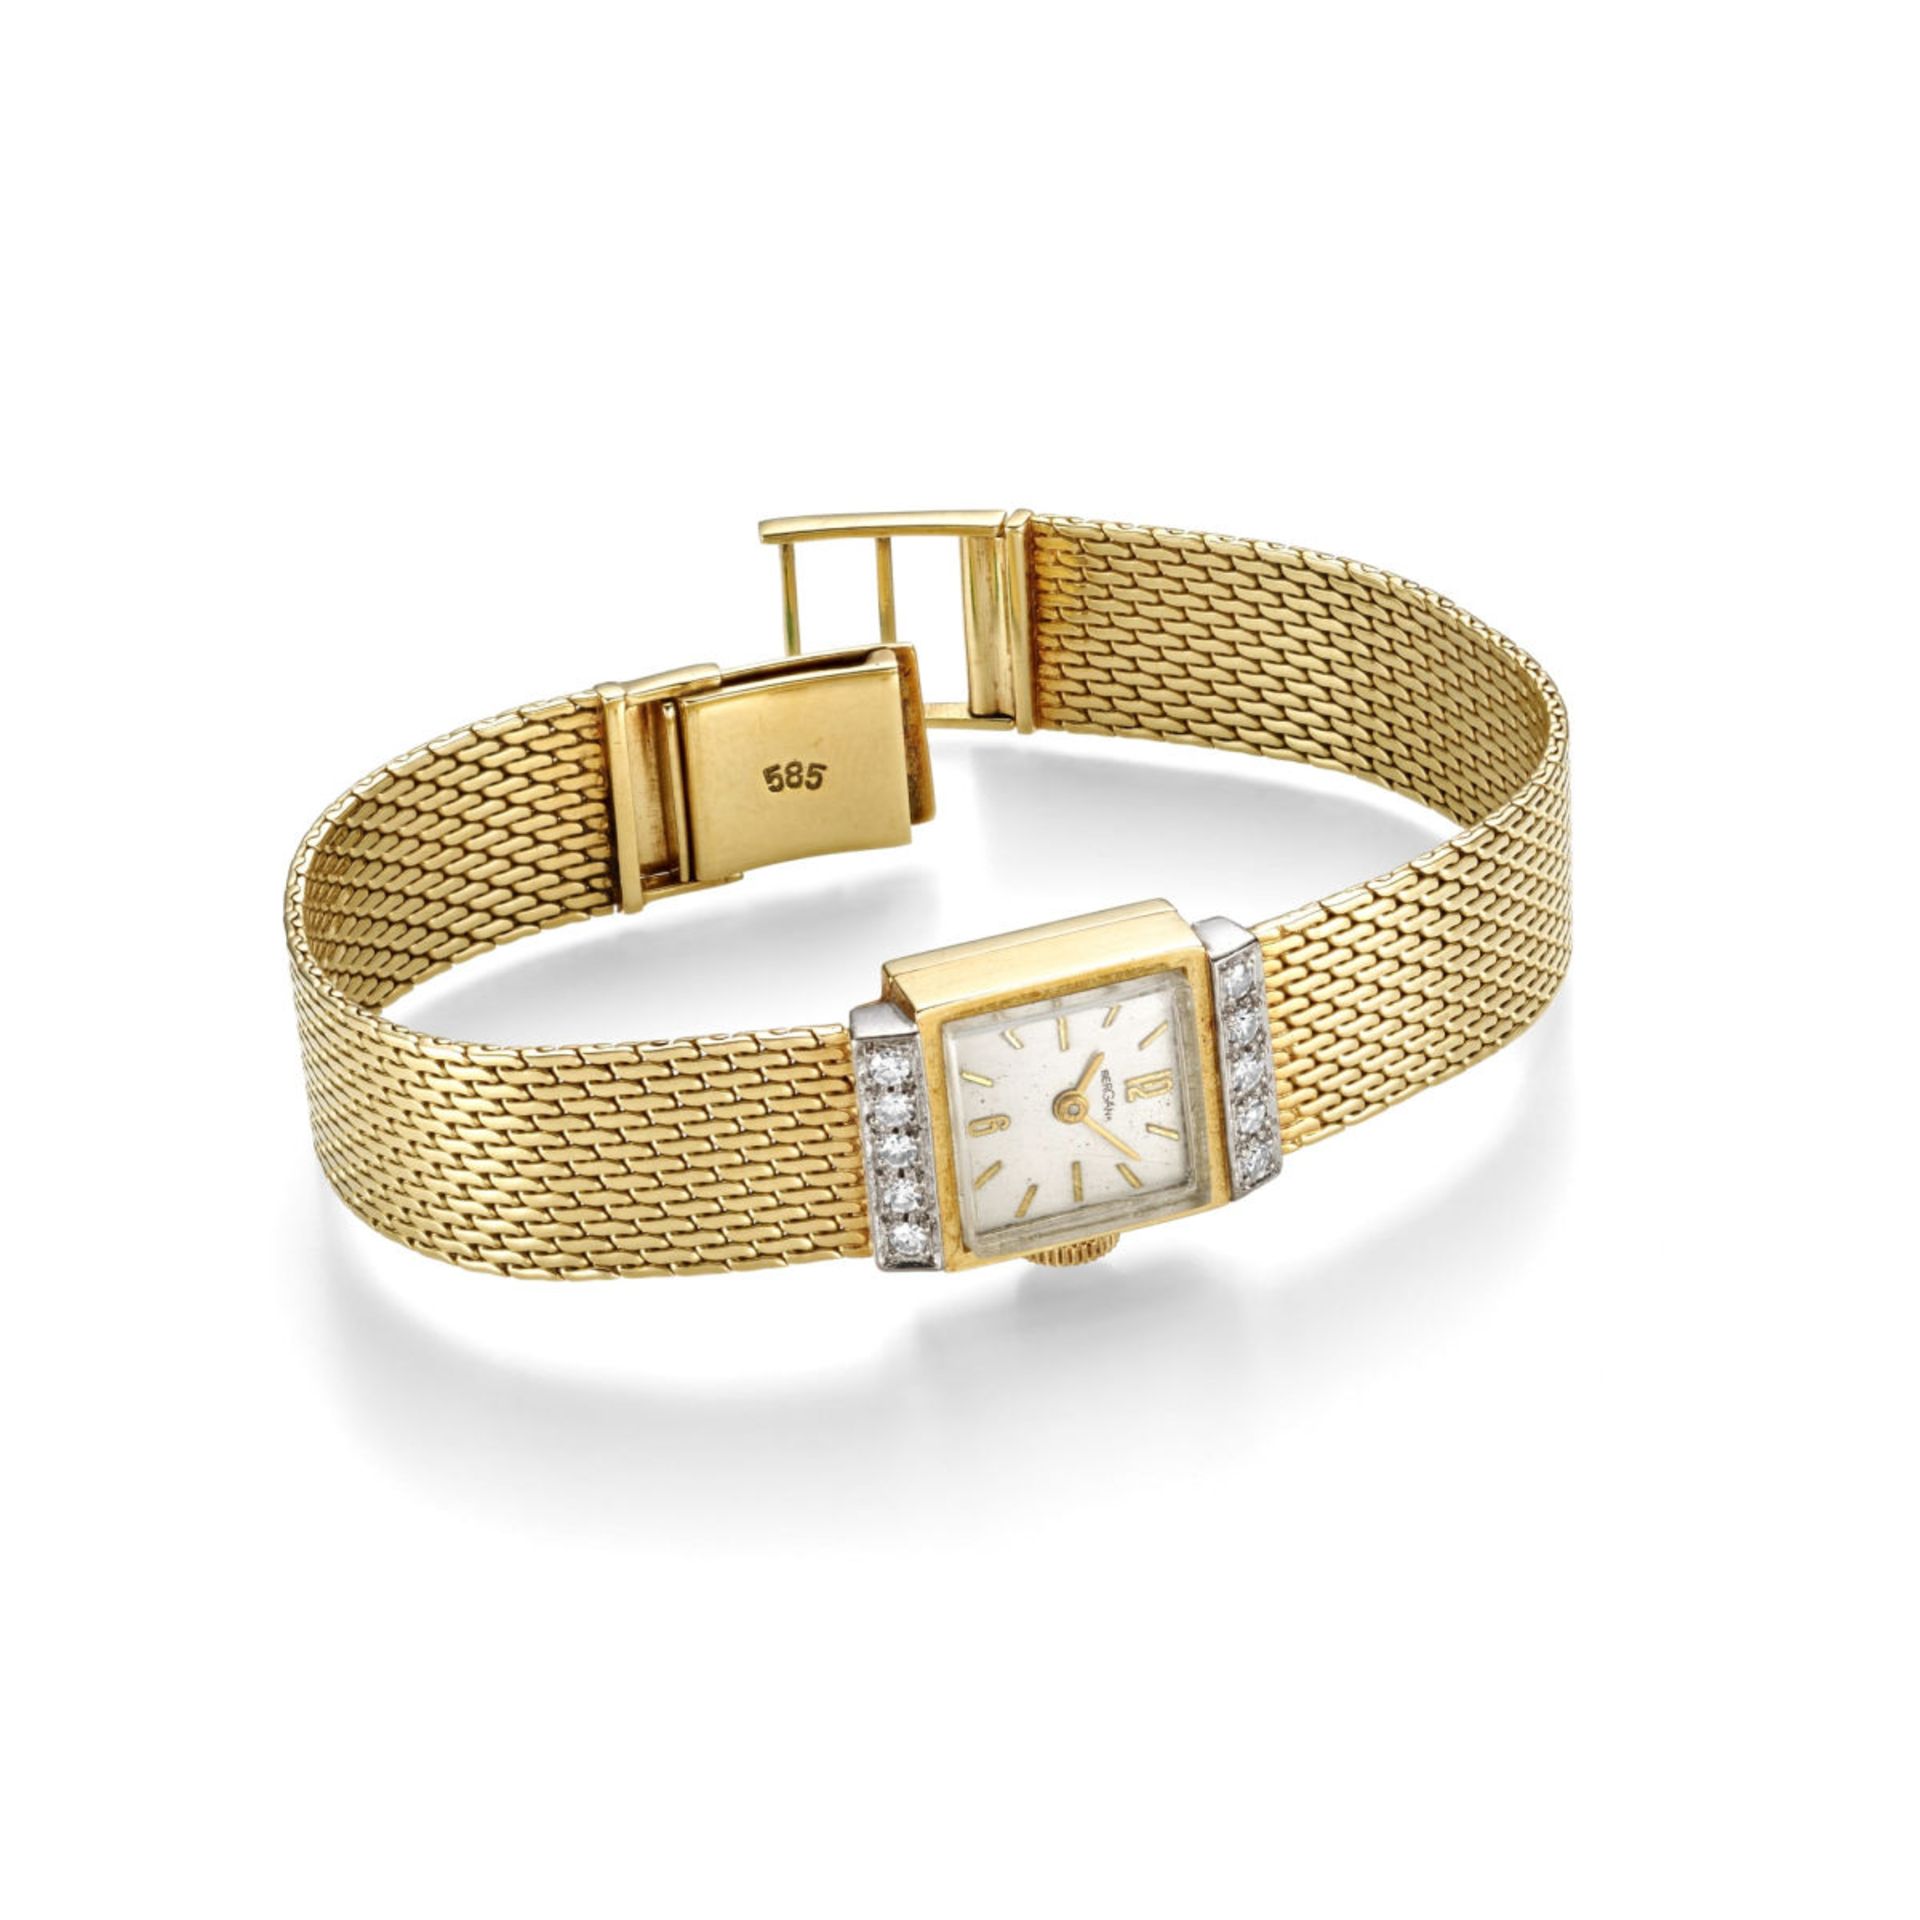 Bergana vintage jewellery watch with diamonds 